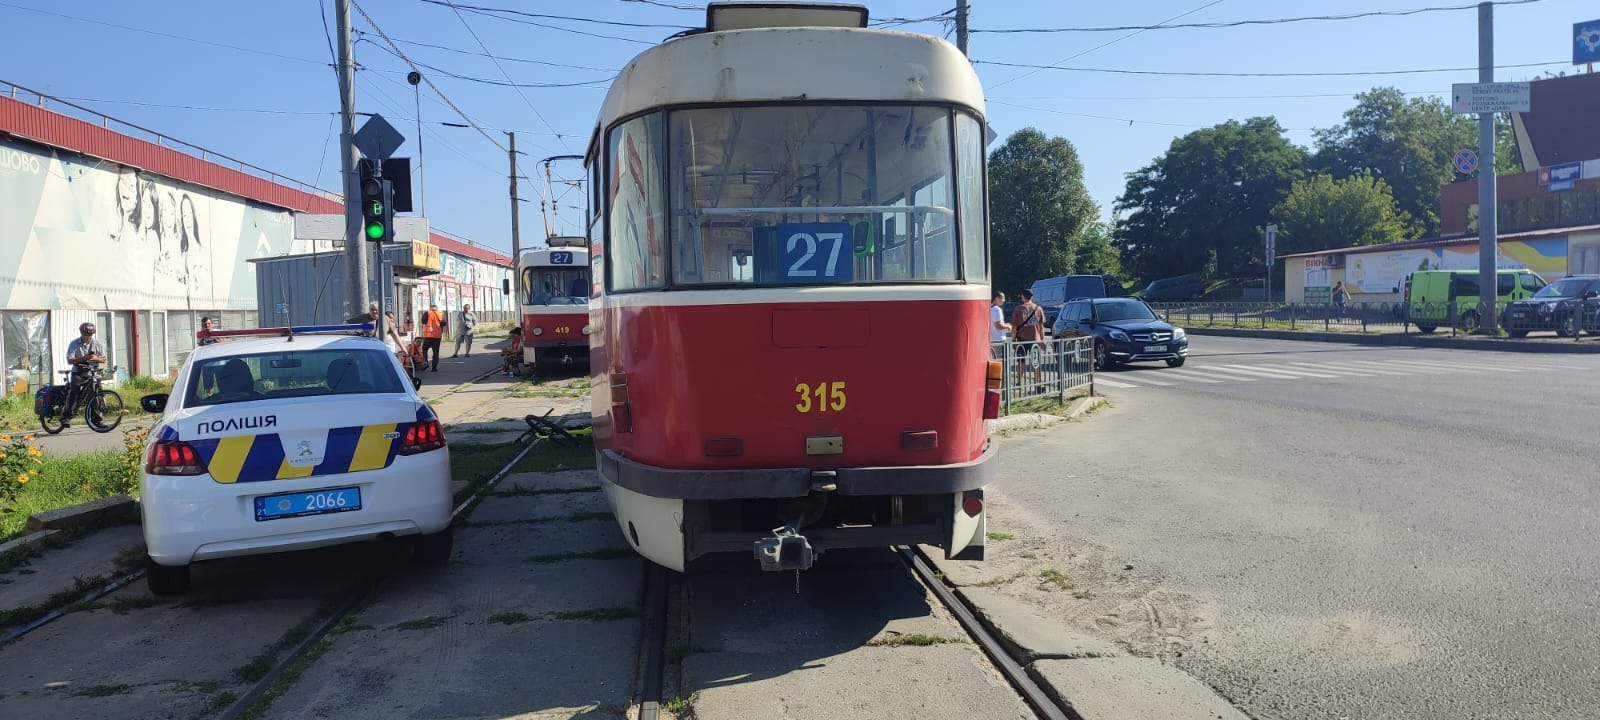 27 трамвай  Харьков